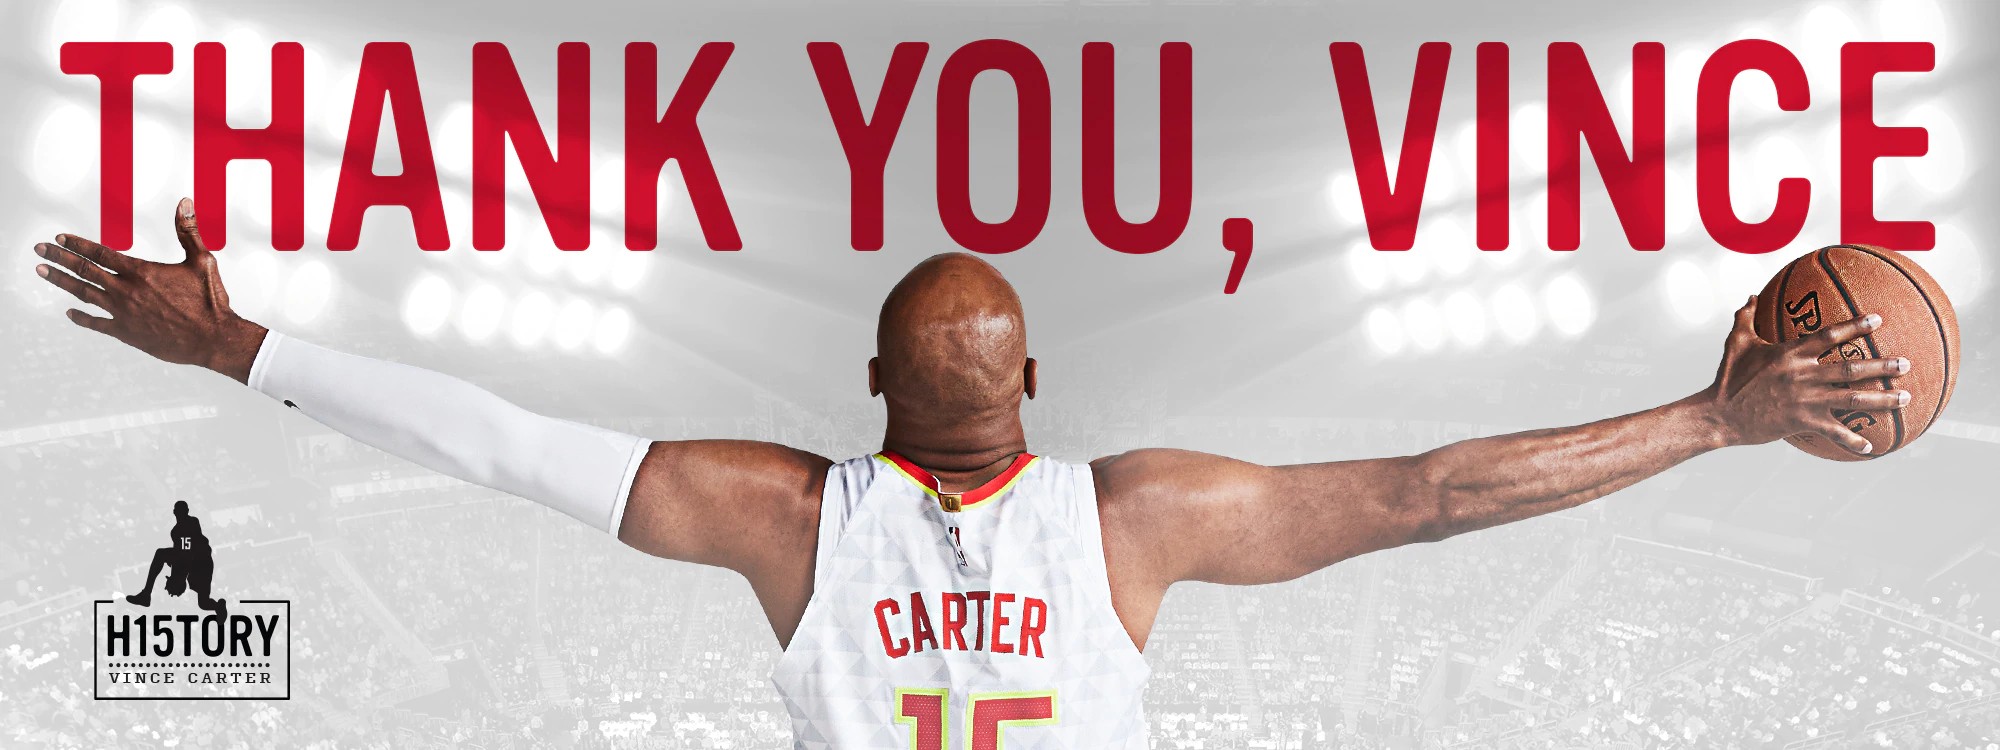 Vince Carter says goodbye to his 22-year basketball career - CGTN